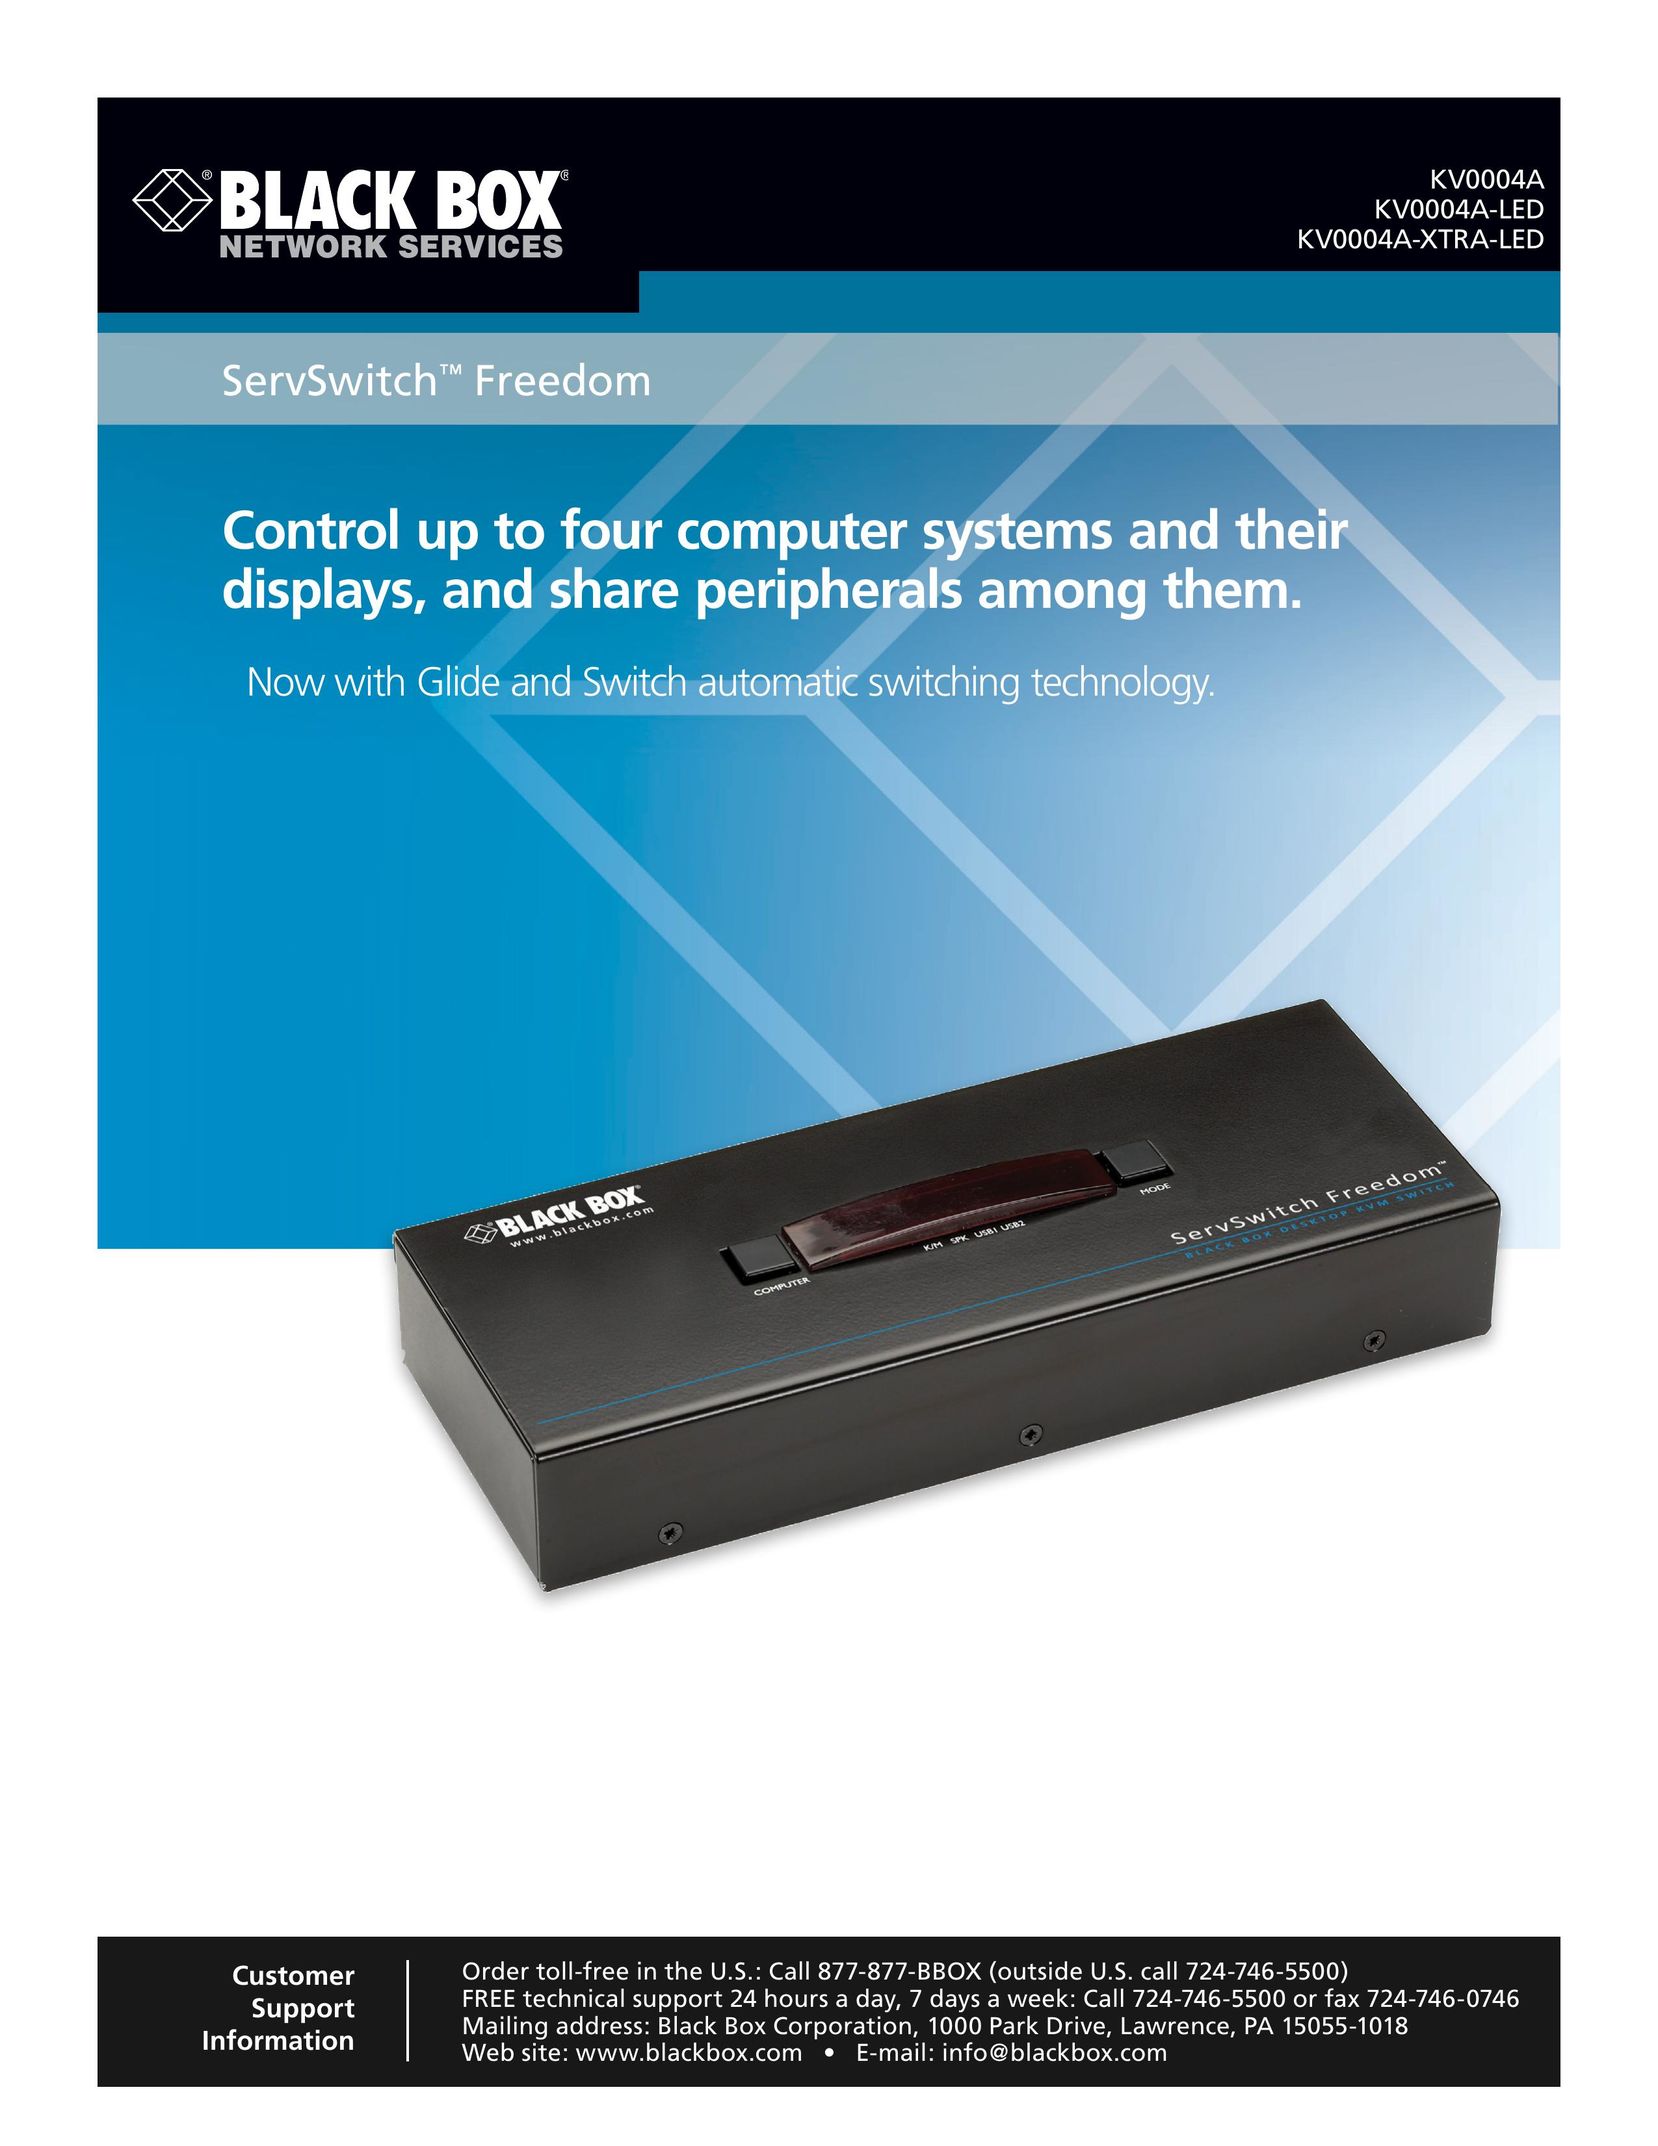 Black Box KV0004A-XTRA-LED Computer Accessories User Manual